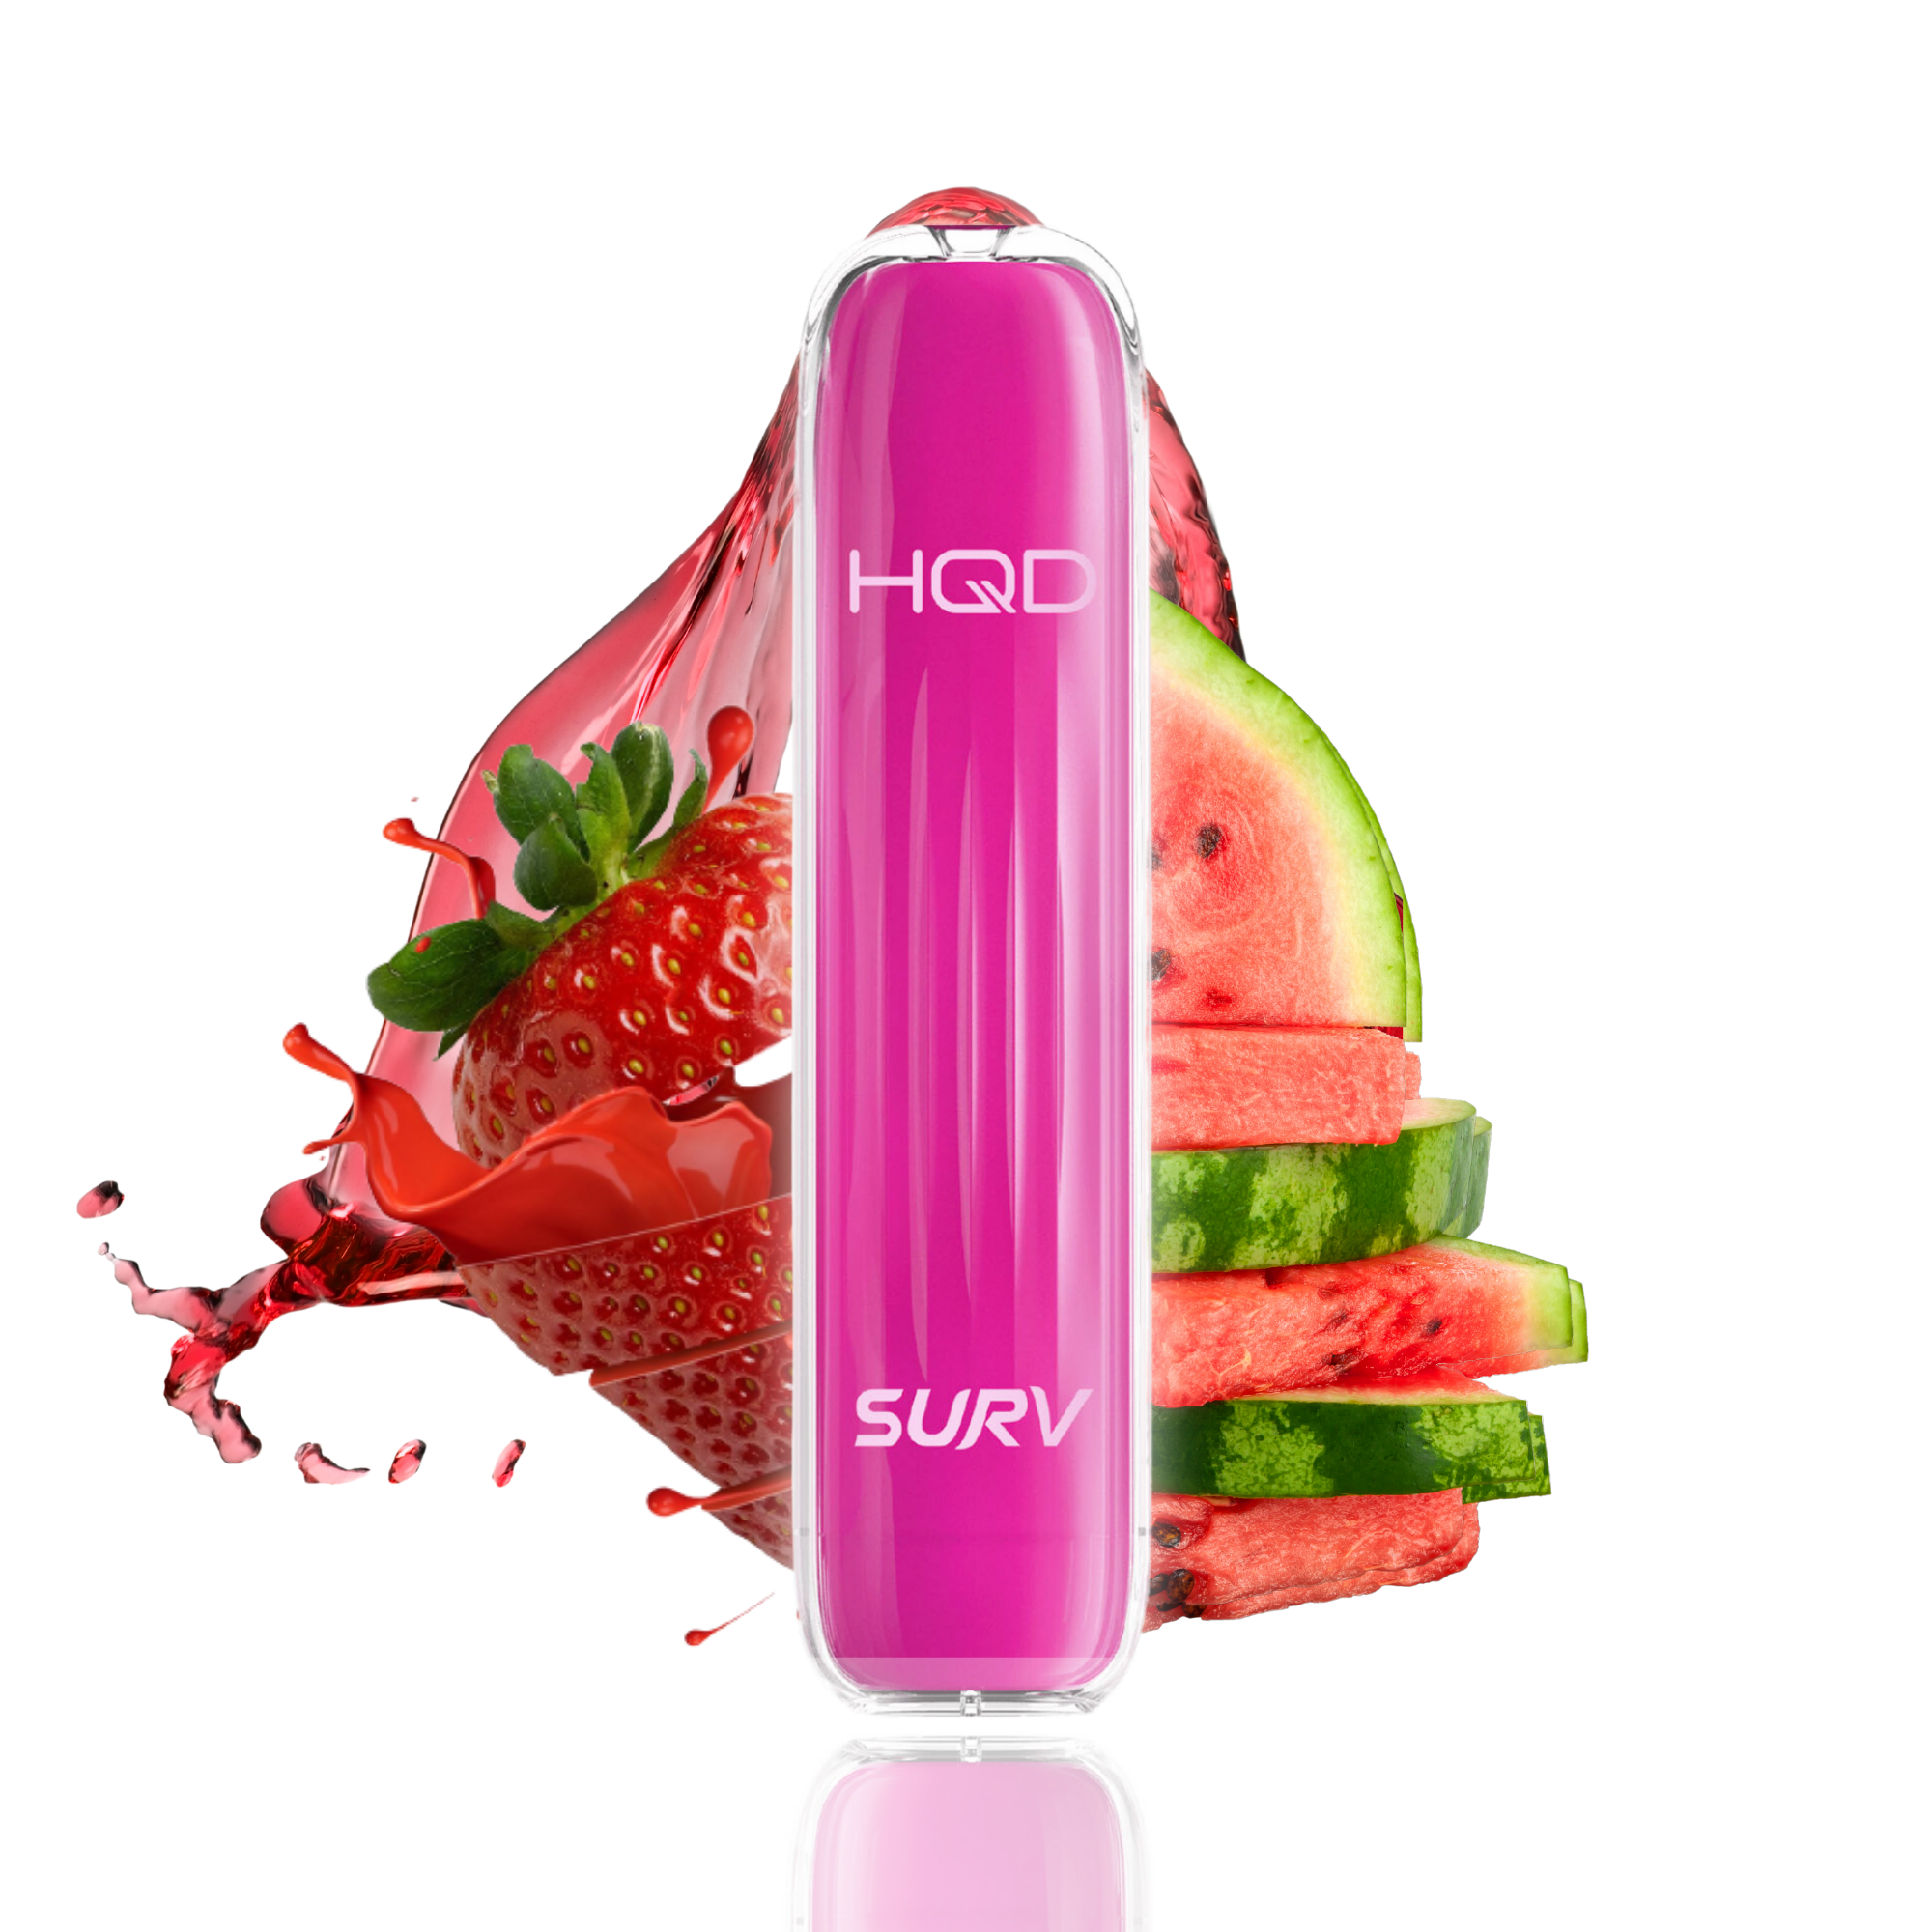 HQD Surv Strawberry Watermelon 18mg/ml